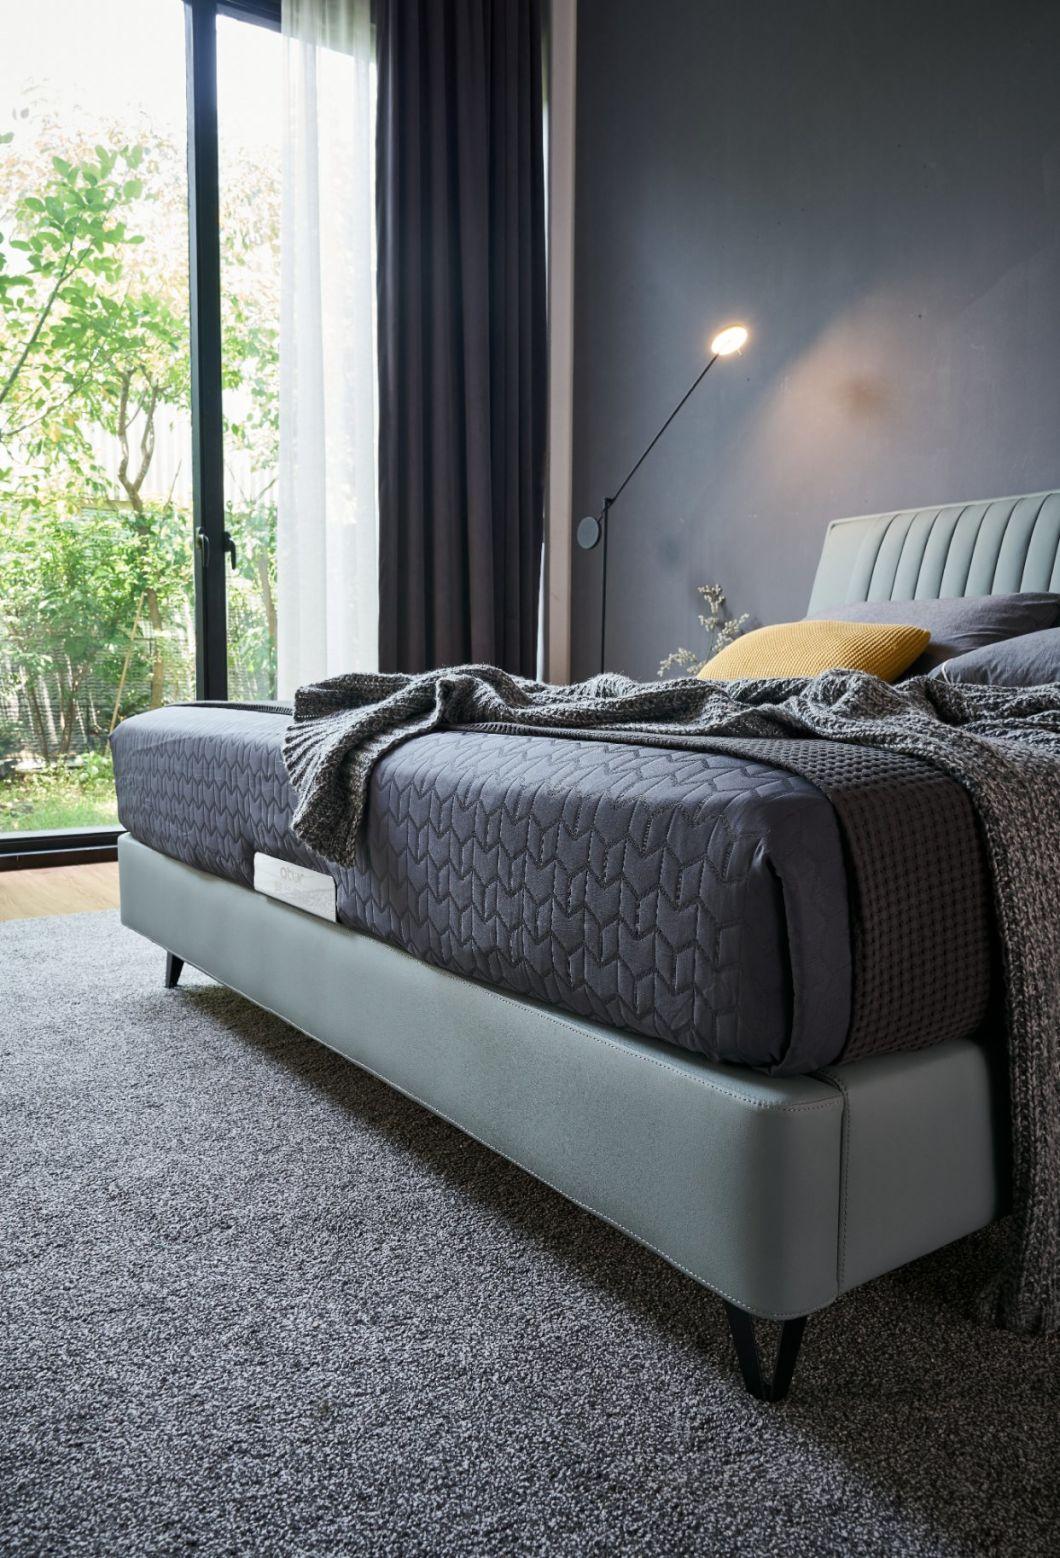 Luxury Home Furniture Bedroom Furniture Set King Size Bed for Villa a-Wf019